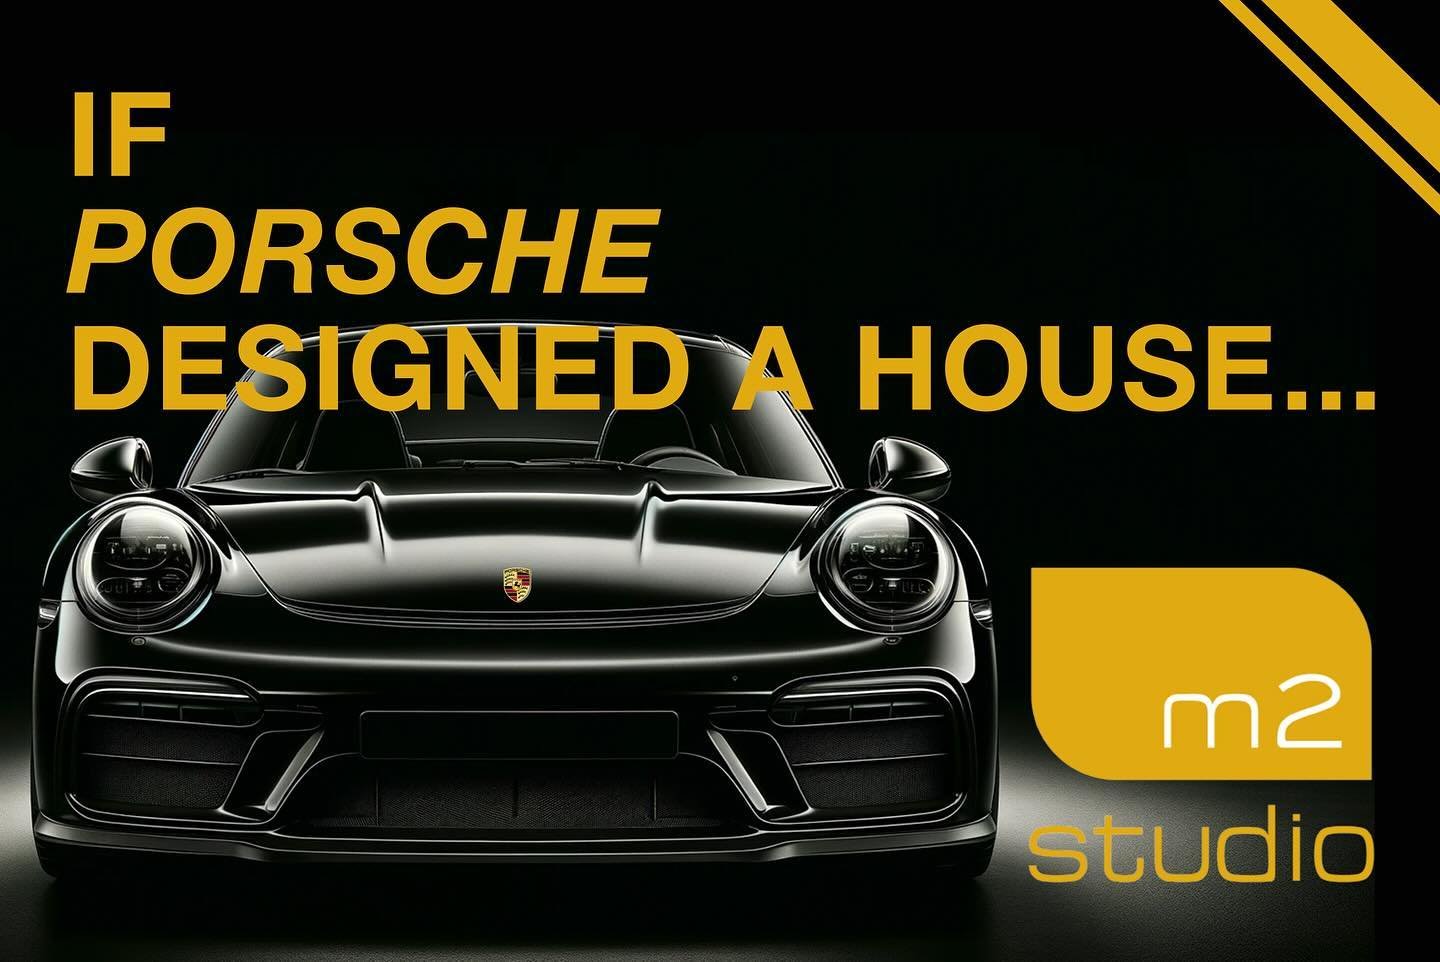 If Porsche designed a house - m2 studio 🔥 

GC: @precisionbuilders
AXIS Engineering